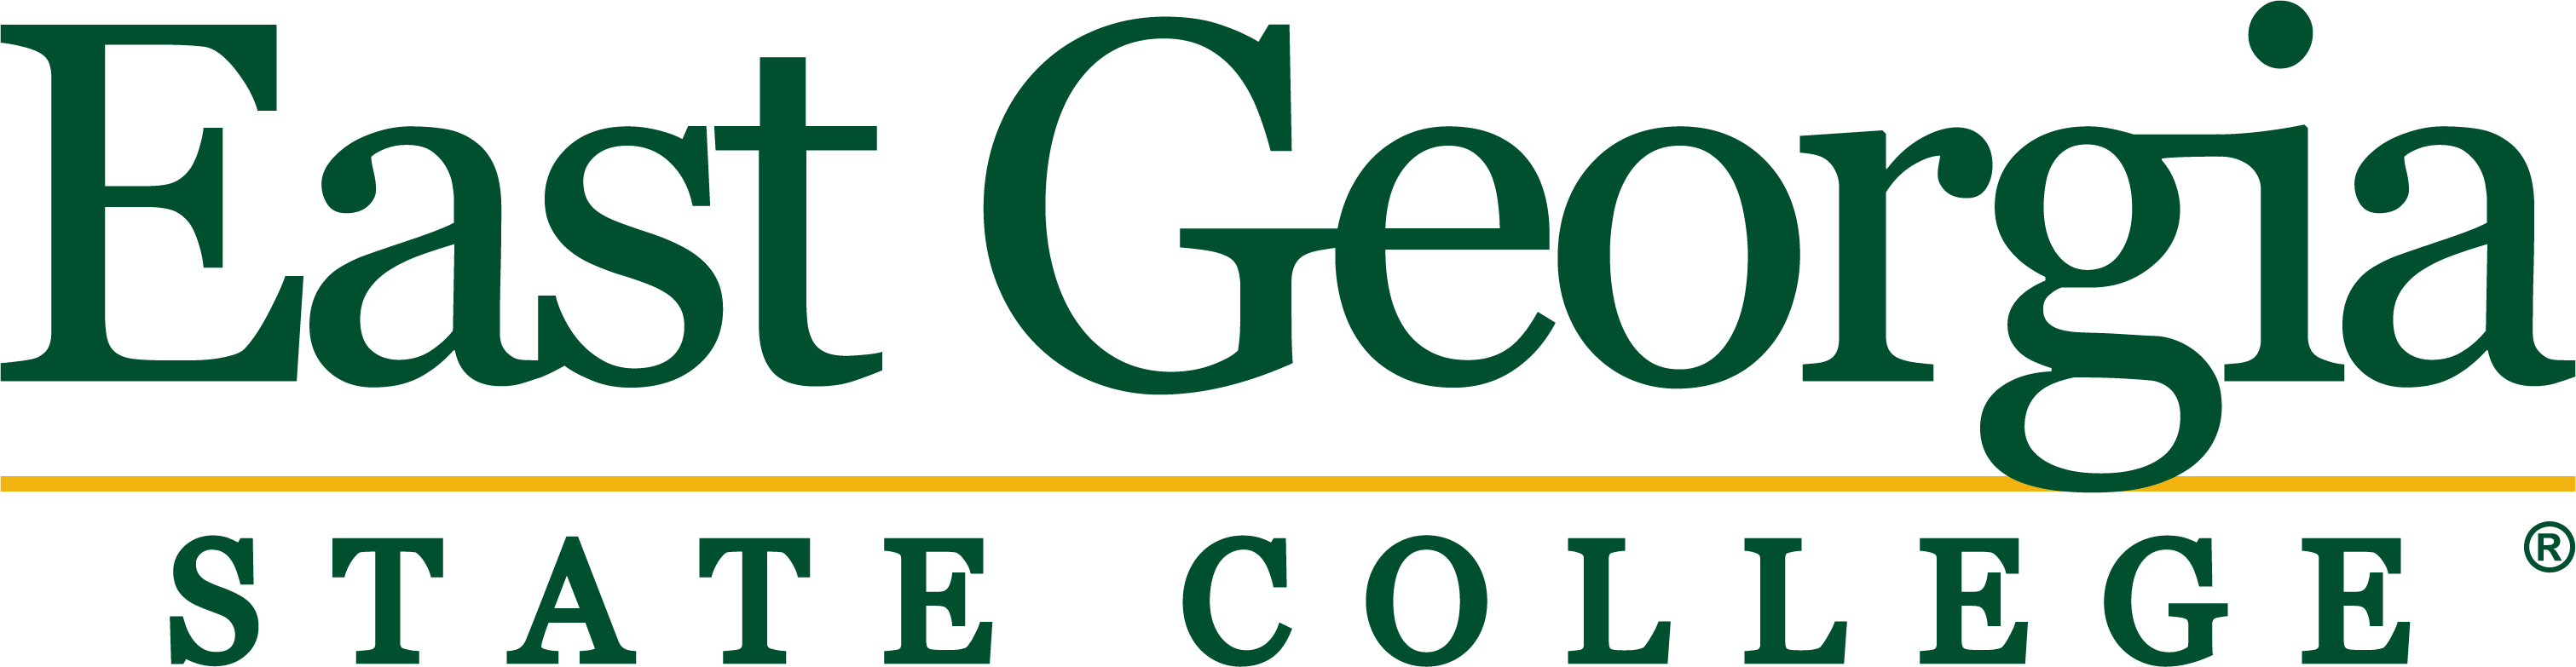 East Georgia State College logo